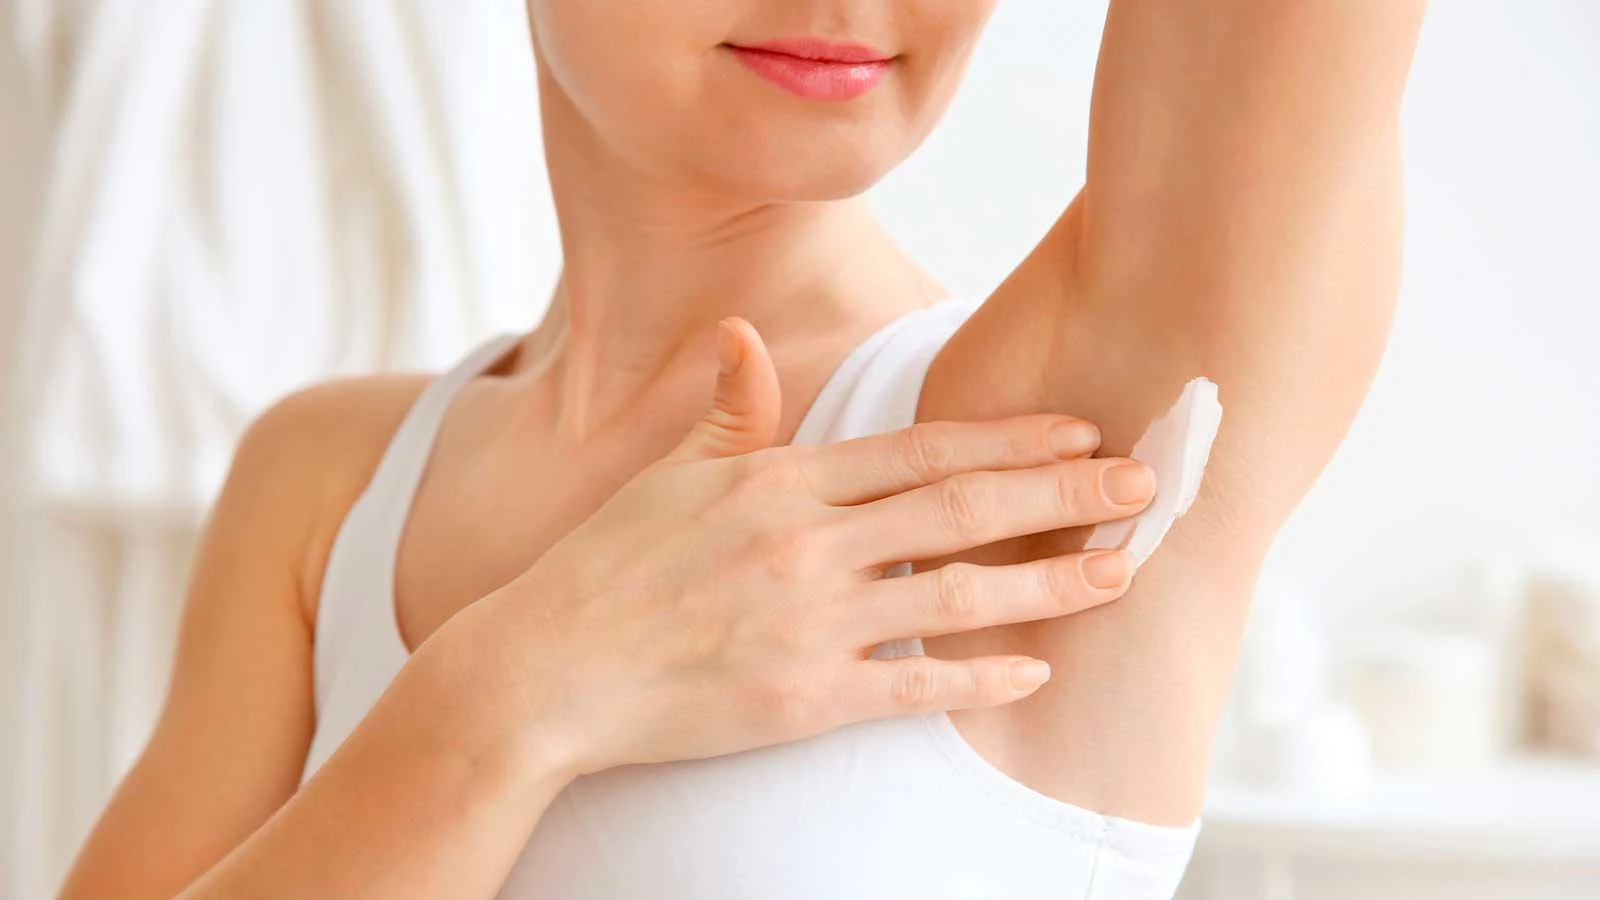 Woman Moisturizing Her Armpit After Shaving